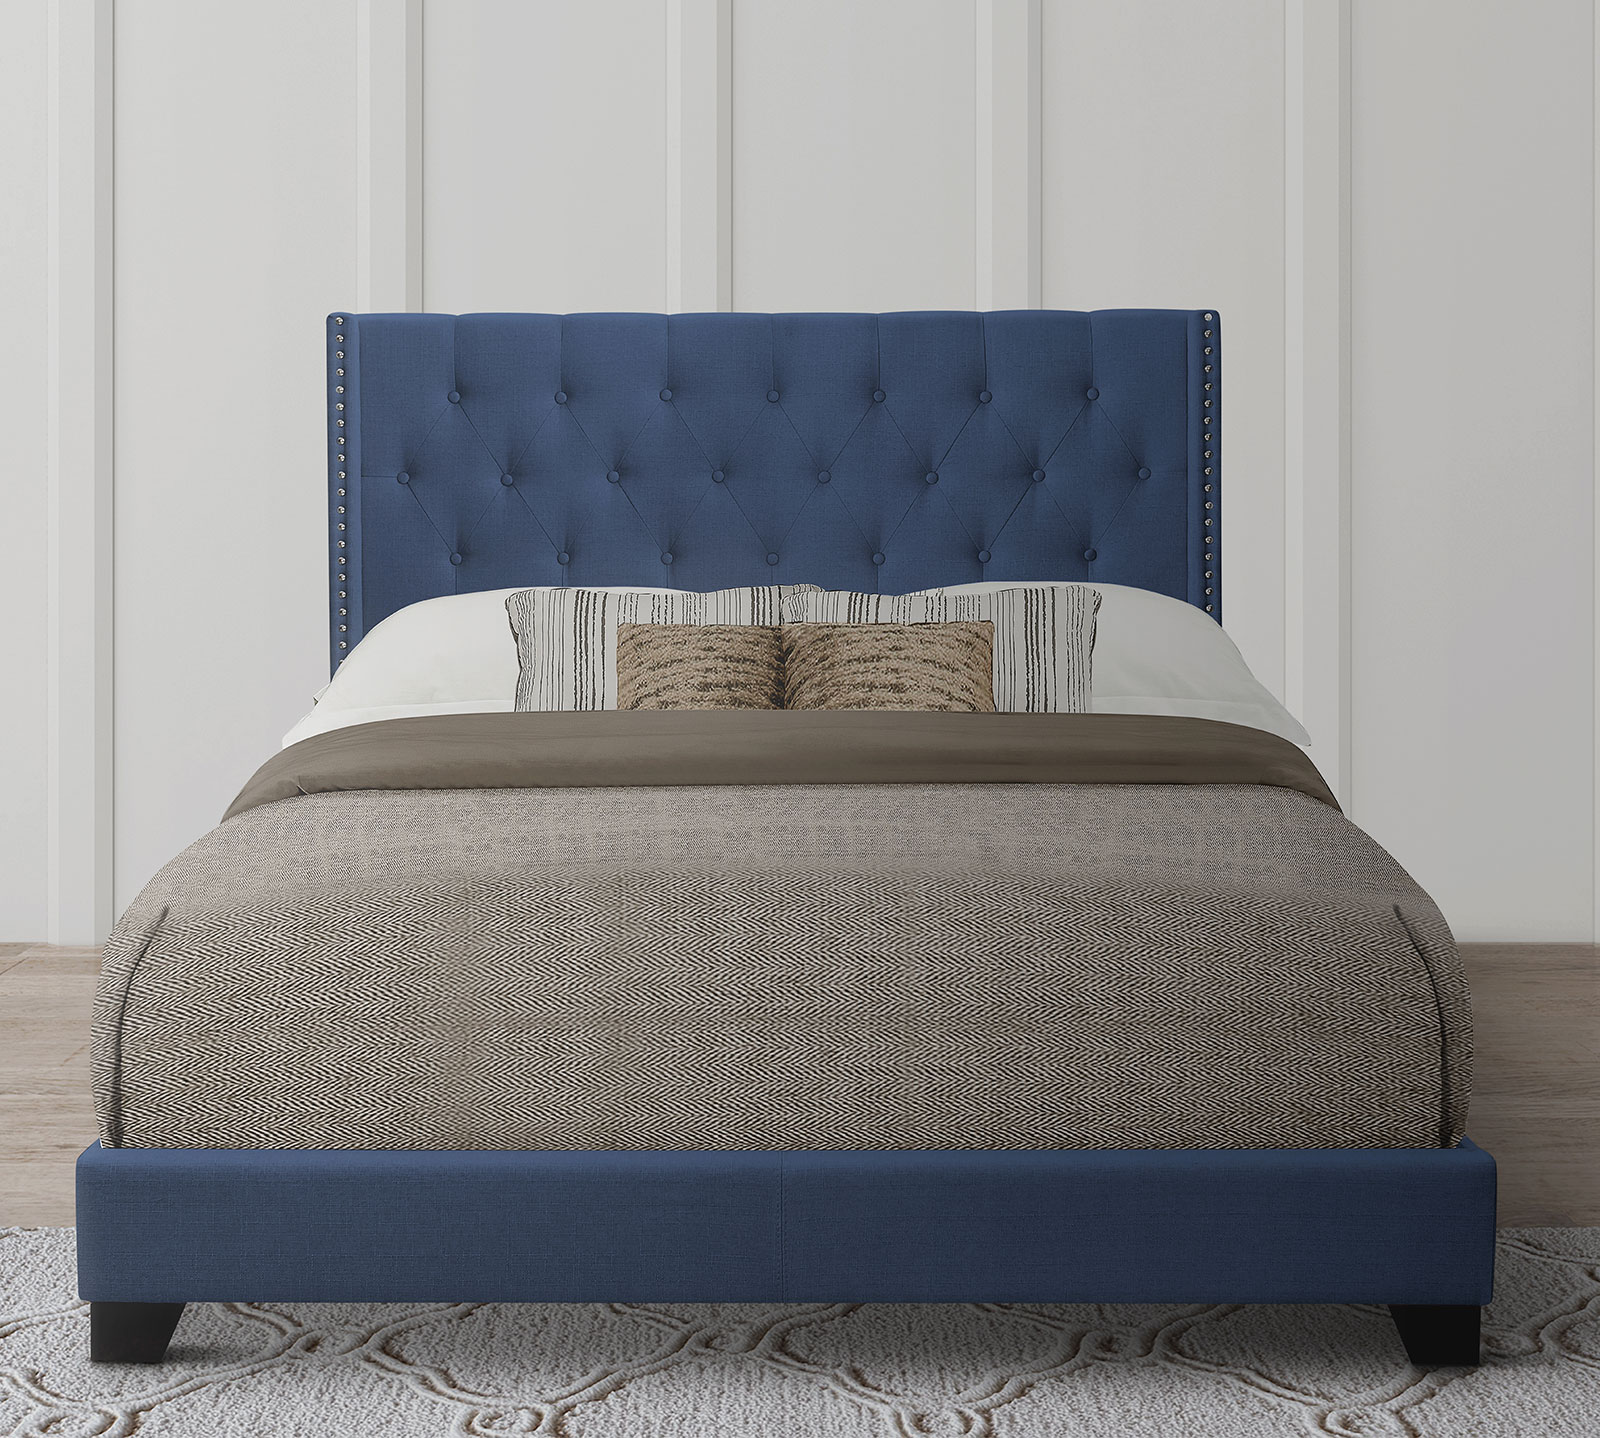 Homelegance Upholstered Bed Set | Queen | Avery Bed Frame & Headboard | Blue